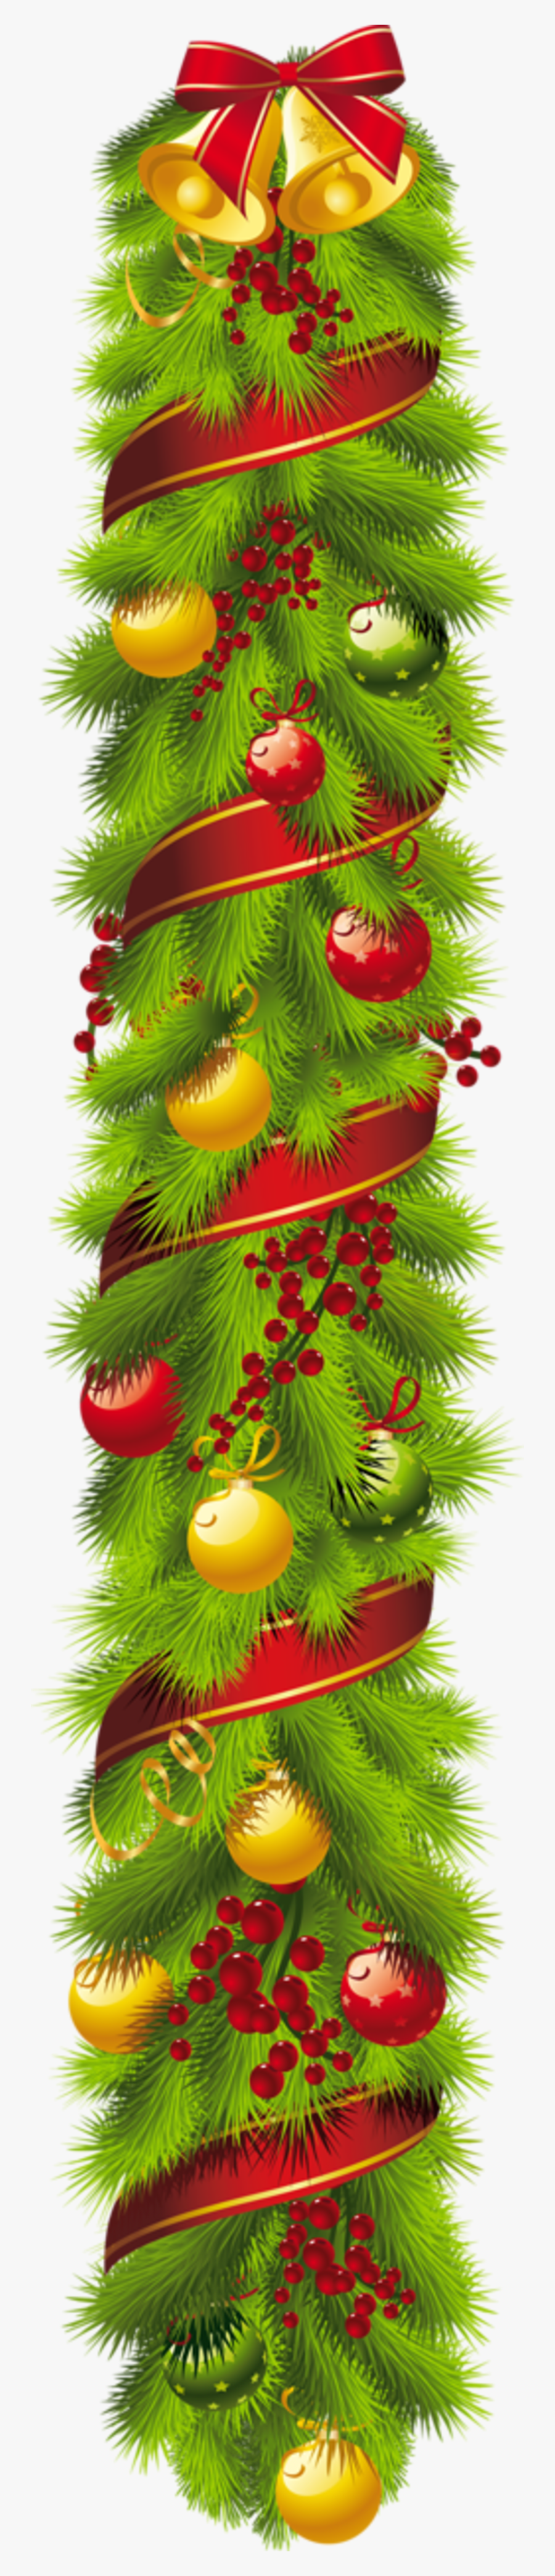 Christmas Vertical Banner Png, Transparent Clipart